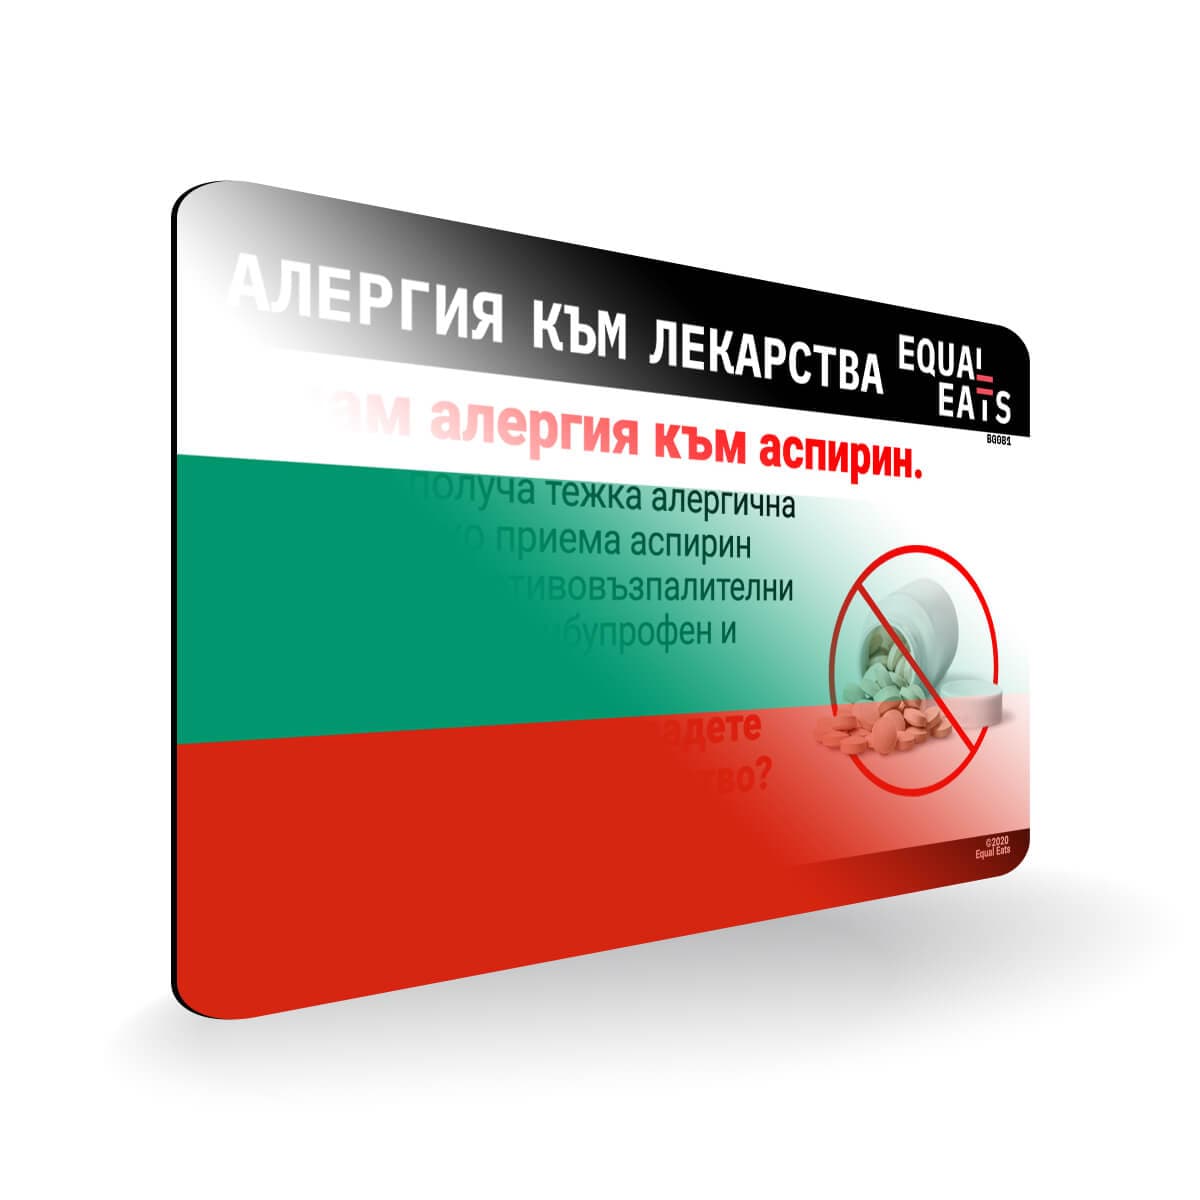 Aspirin Allergy in Bulgarian. Aspirin medical I.D. Card for Bulgaria